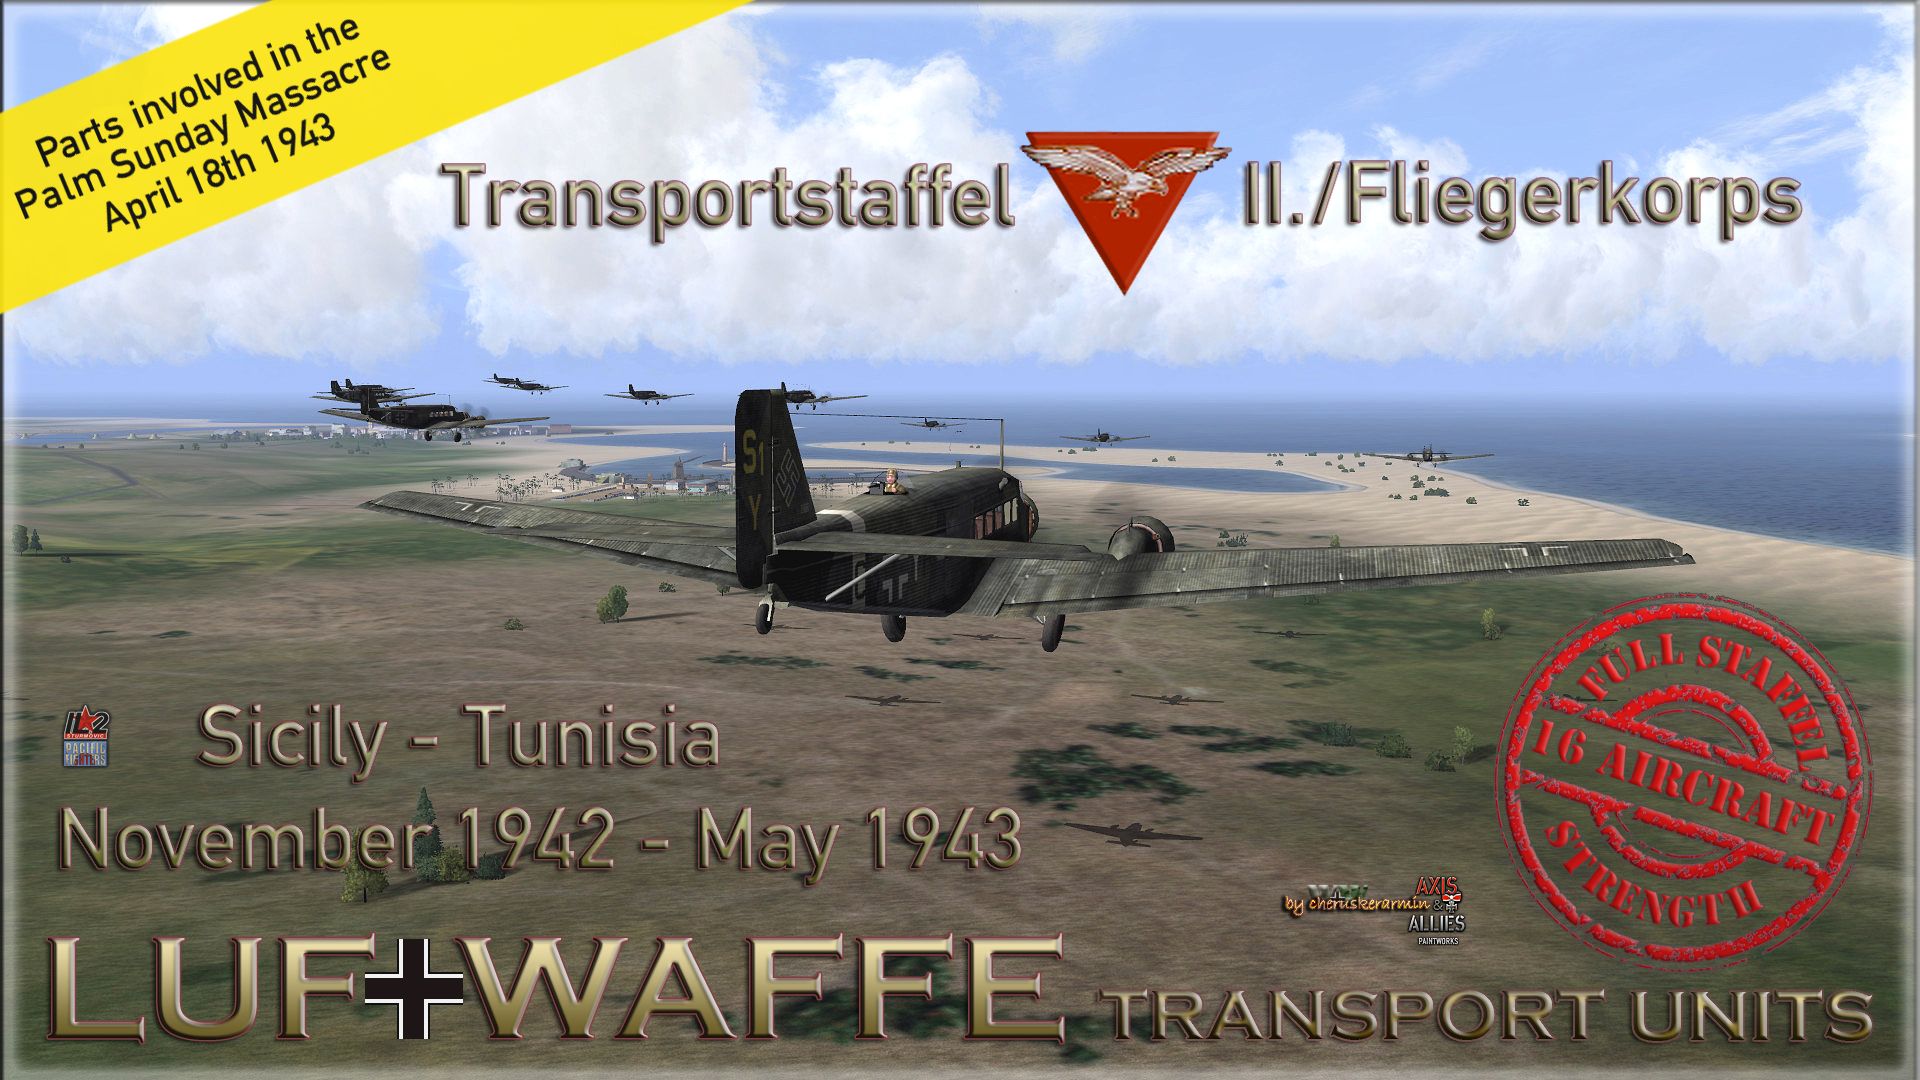 TransportstaffelIIFliegerkorpspic